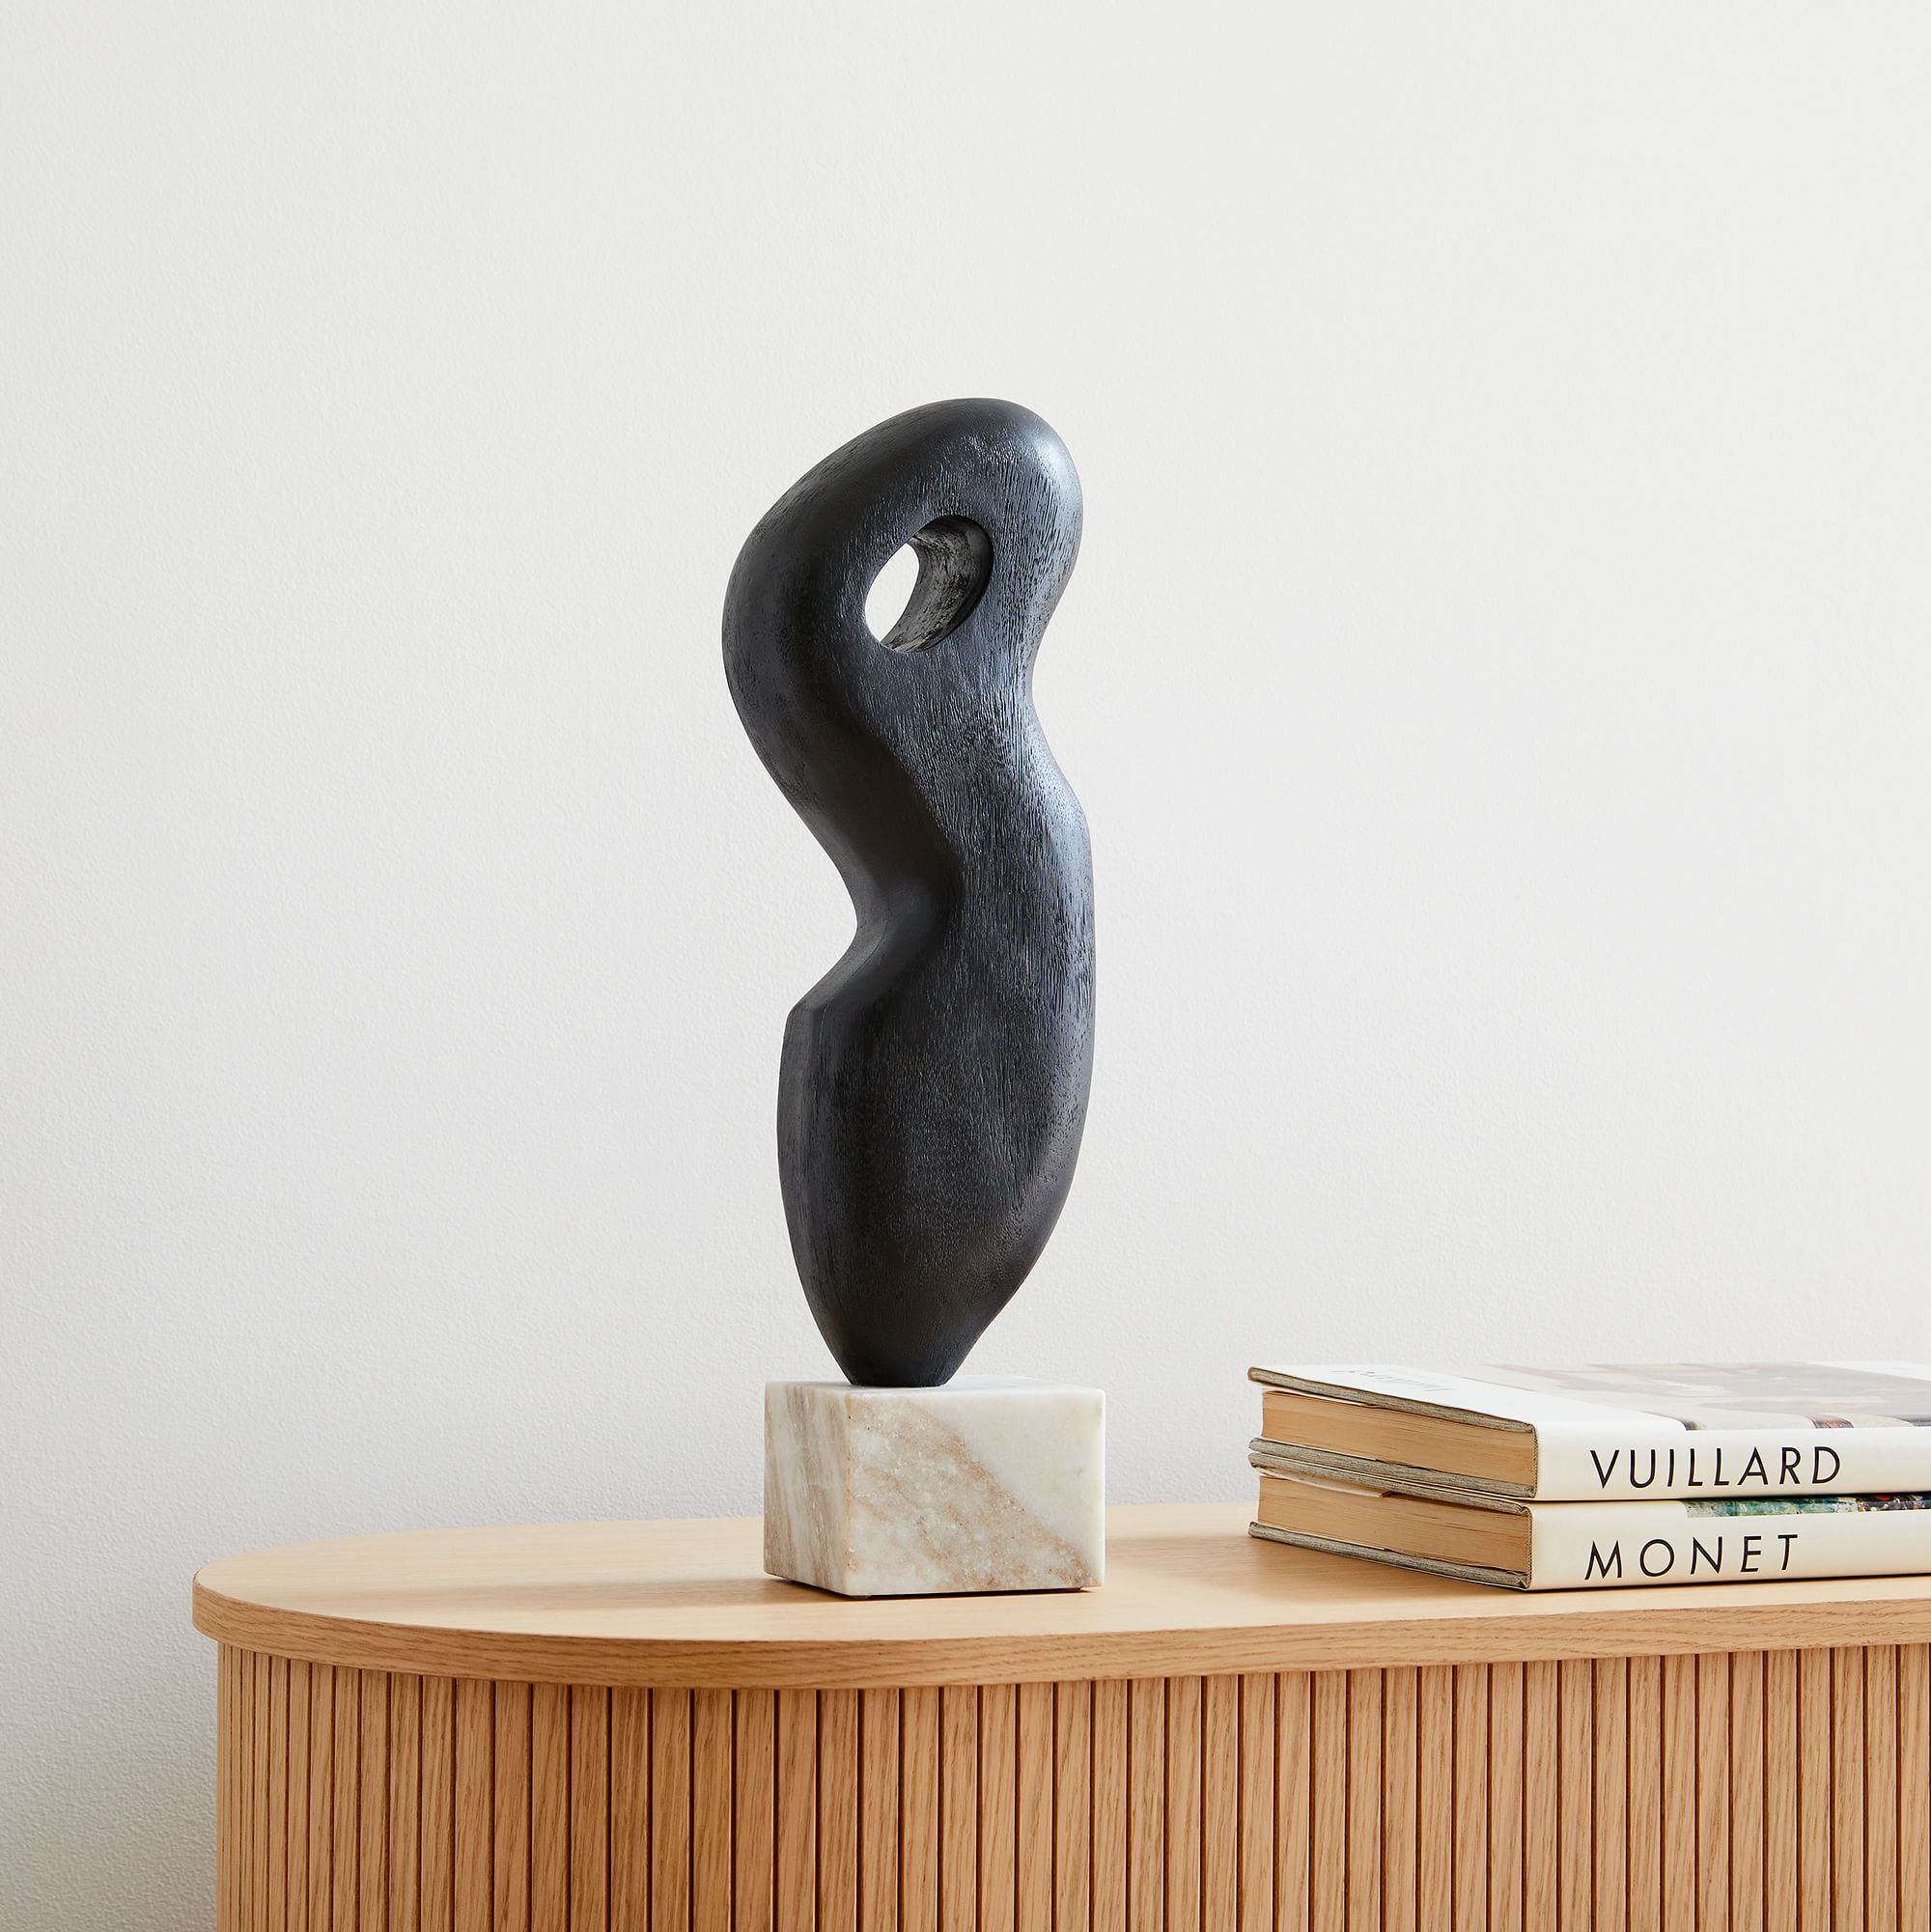 Alba Wood Sculptural Objects | West Elm (US)